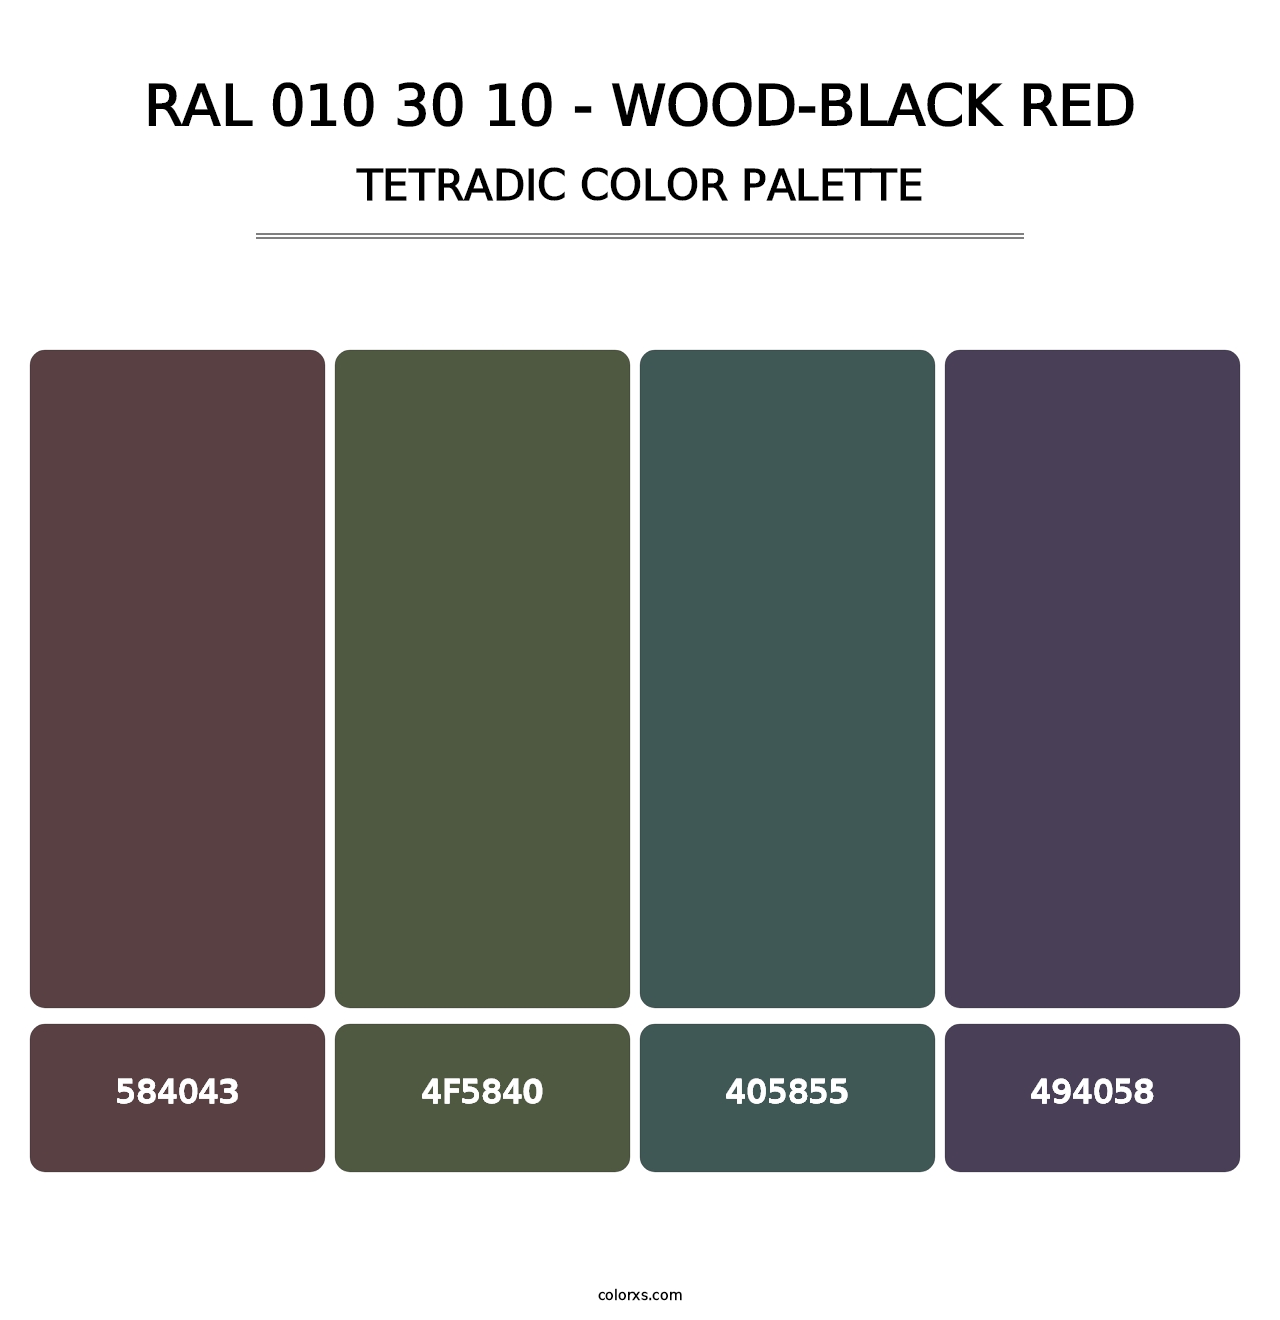 RAL 010 30 10 - Wood-Black Red - Tetradic Color Palette